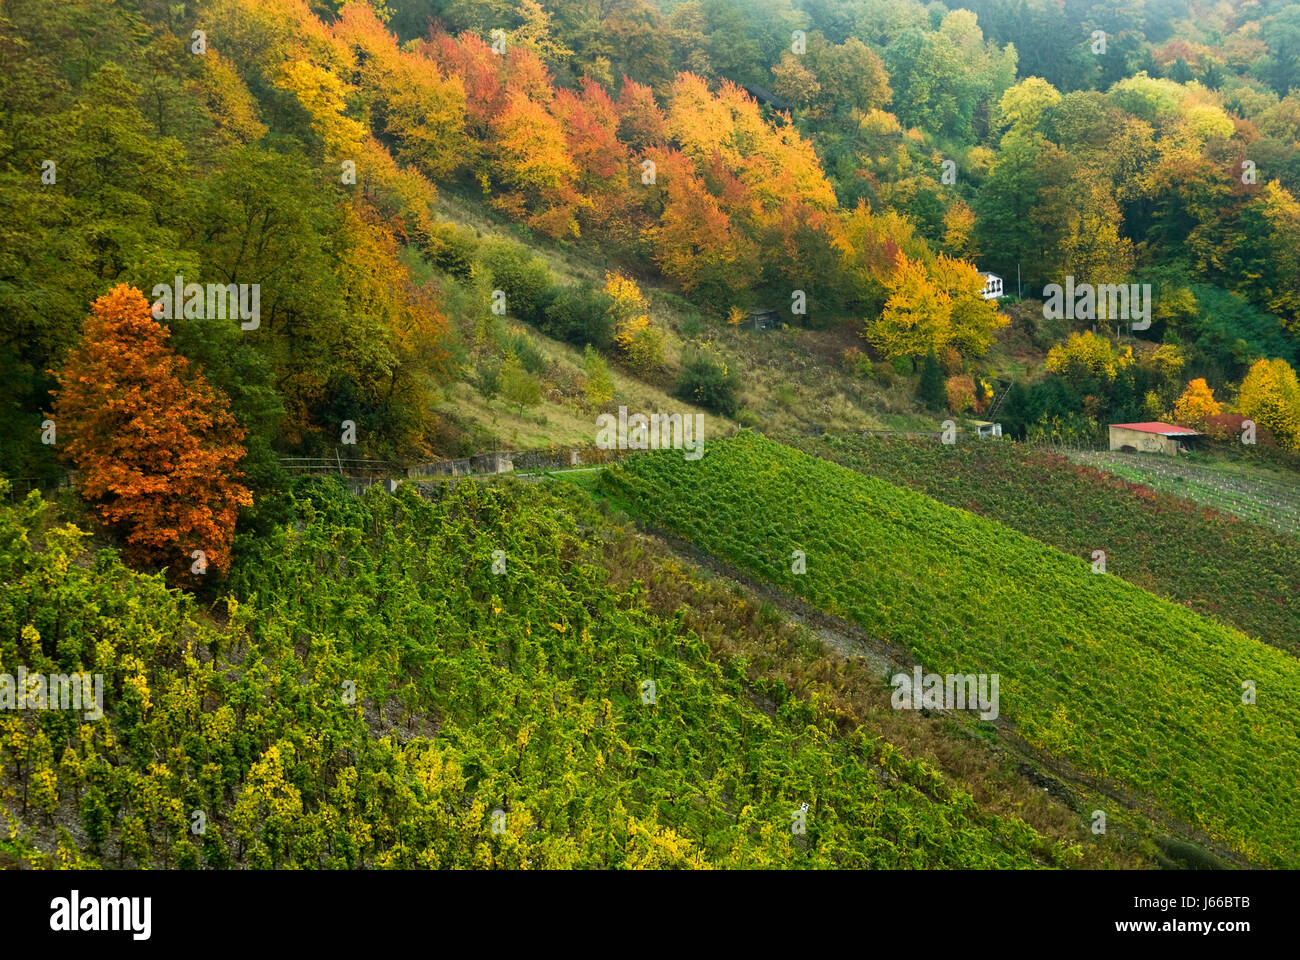 wine vineyards mosel germany german federal republic landscape scenery Stock Photo